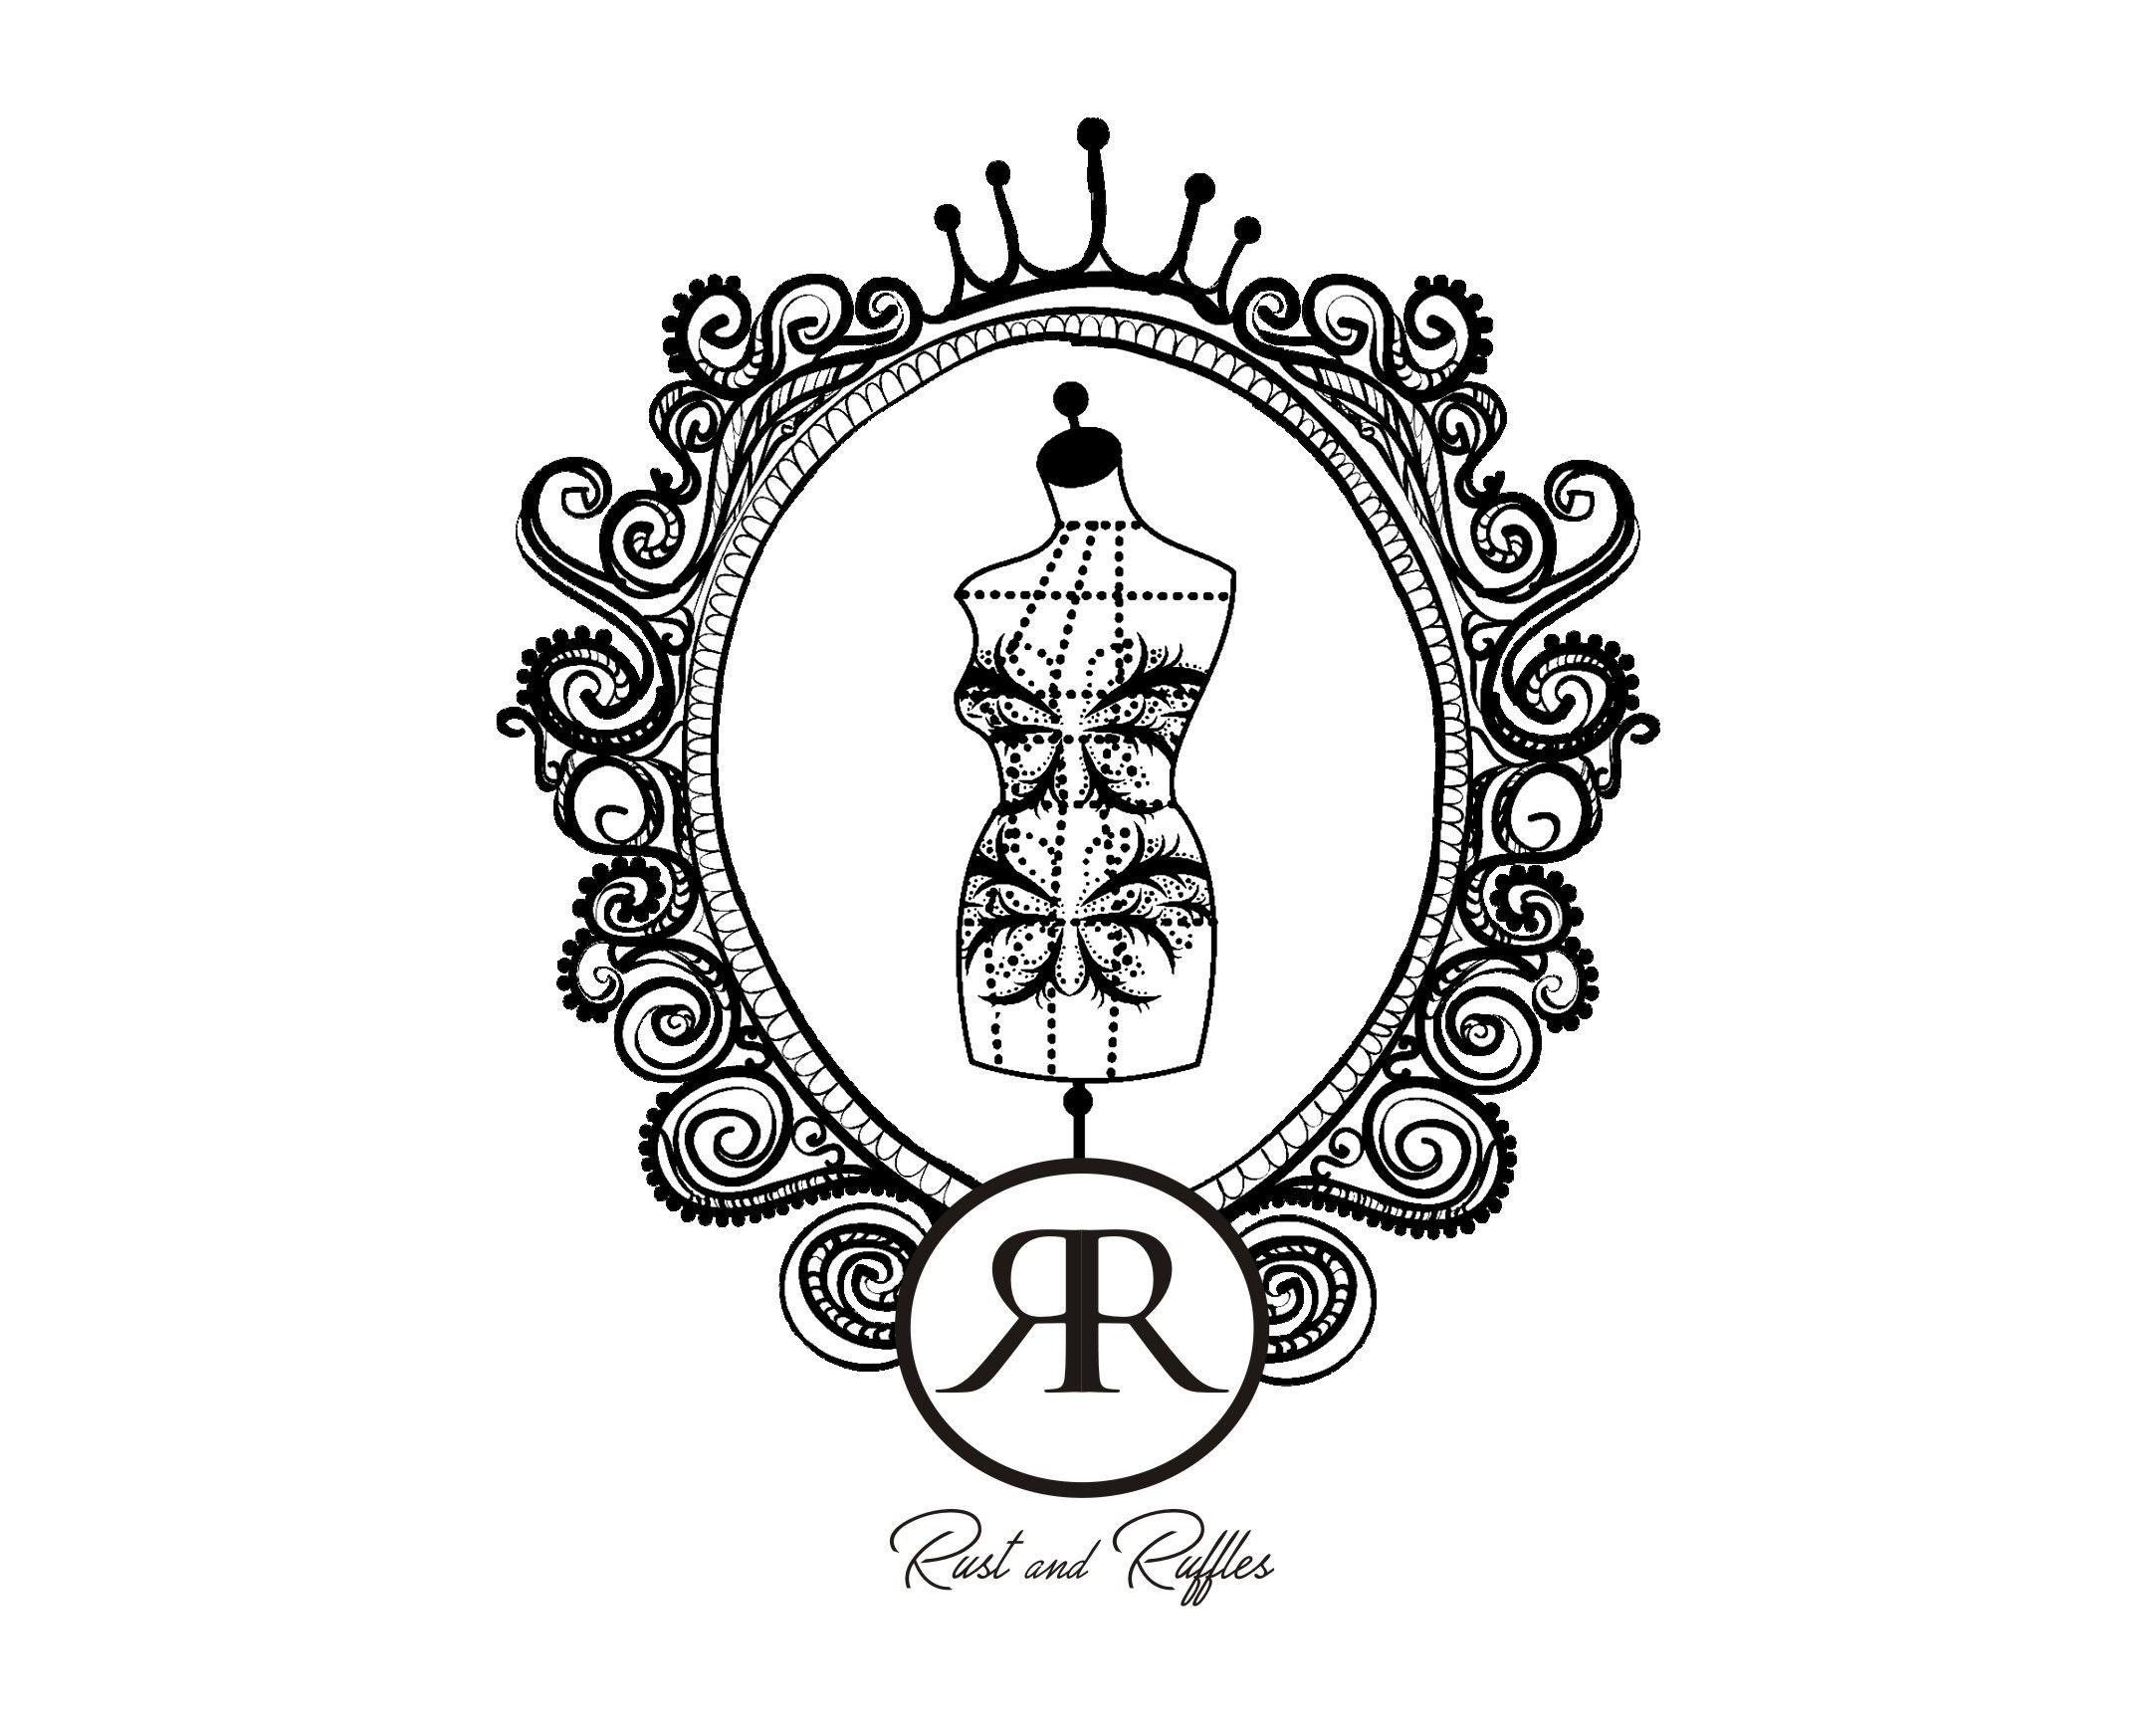 Ruffles Logo - Buy Ready Made Logos for $29.00 by Your Virtual Colleague